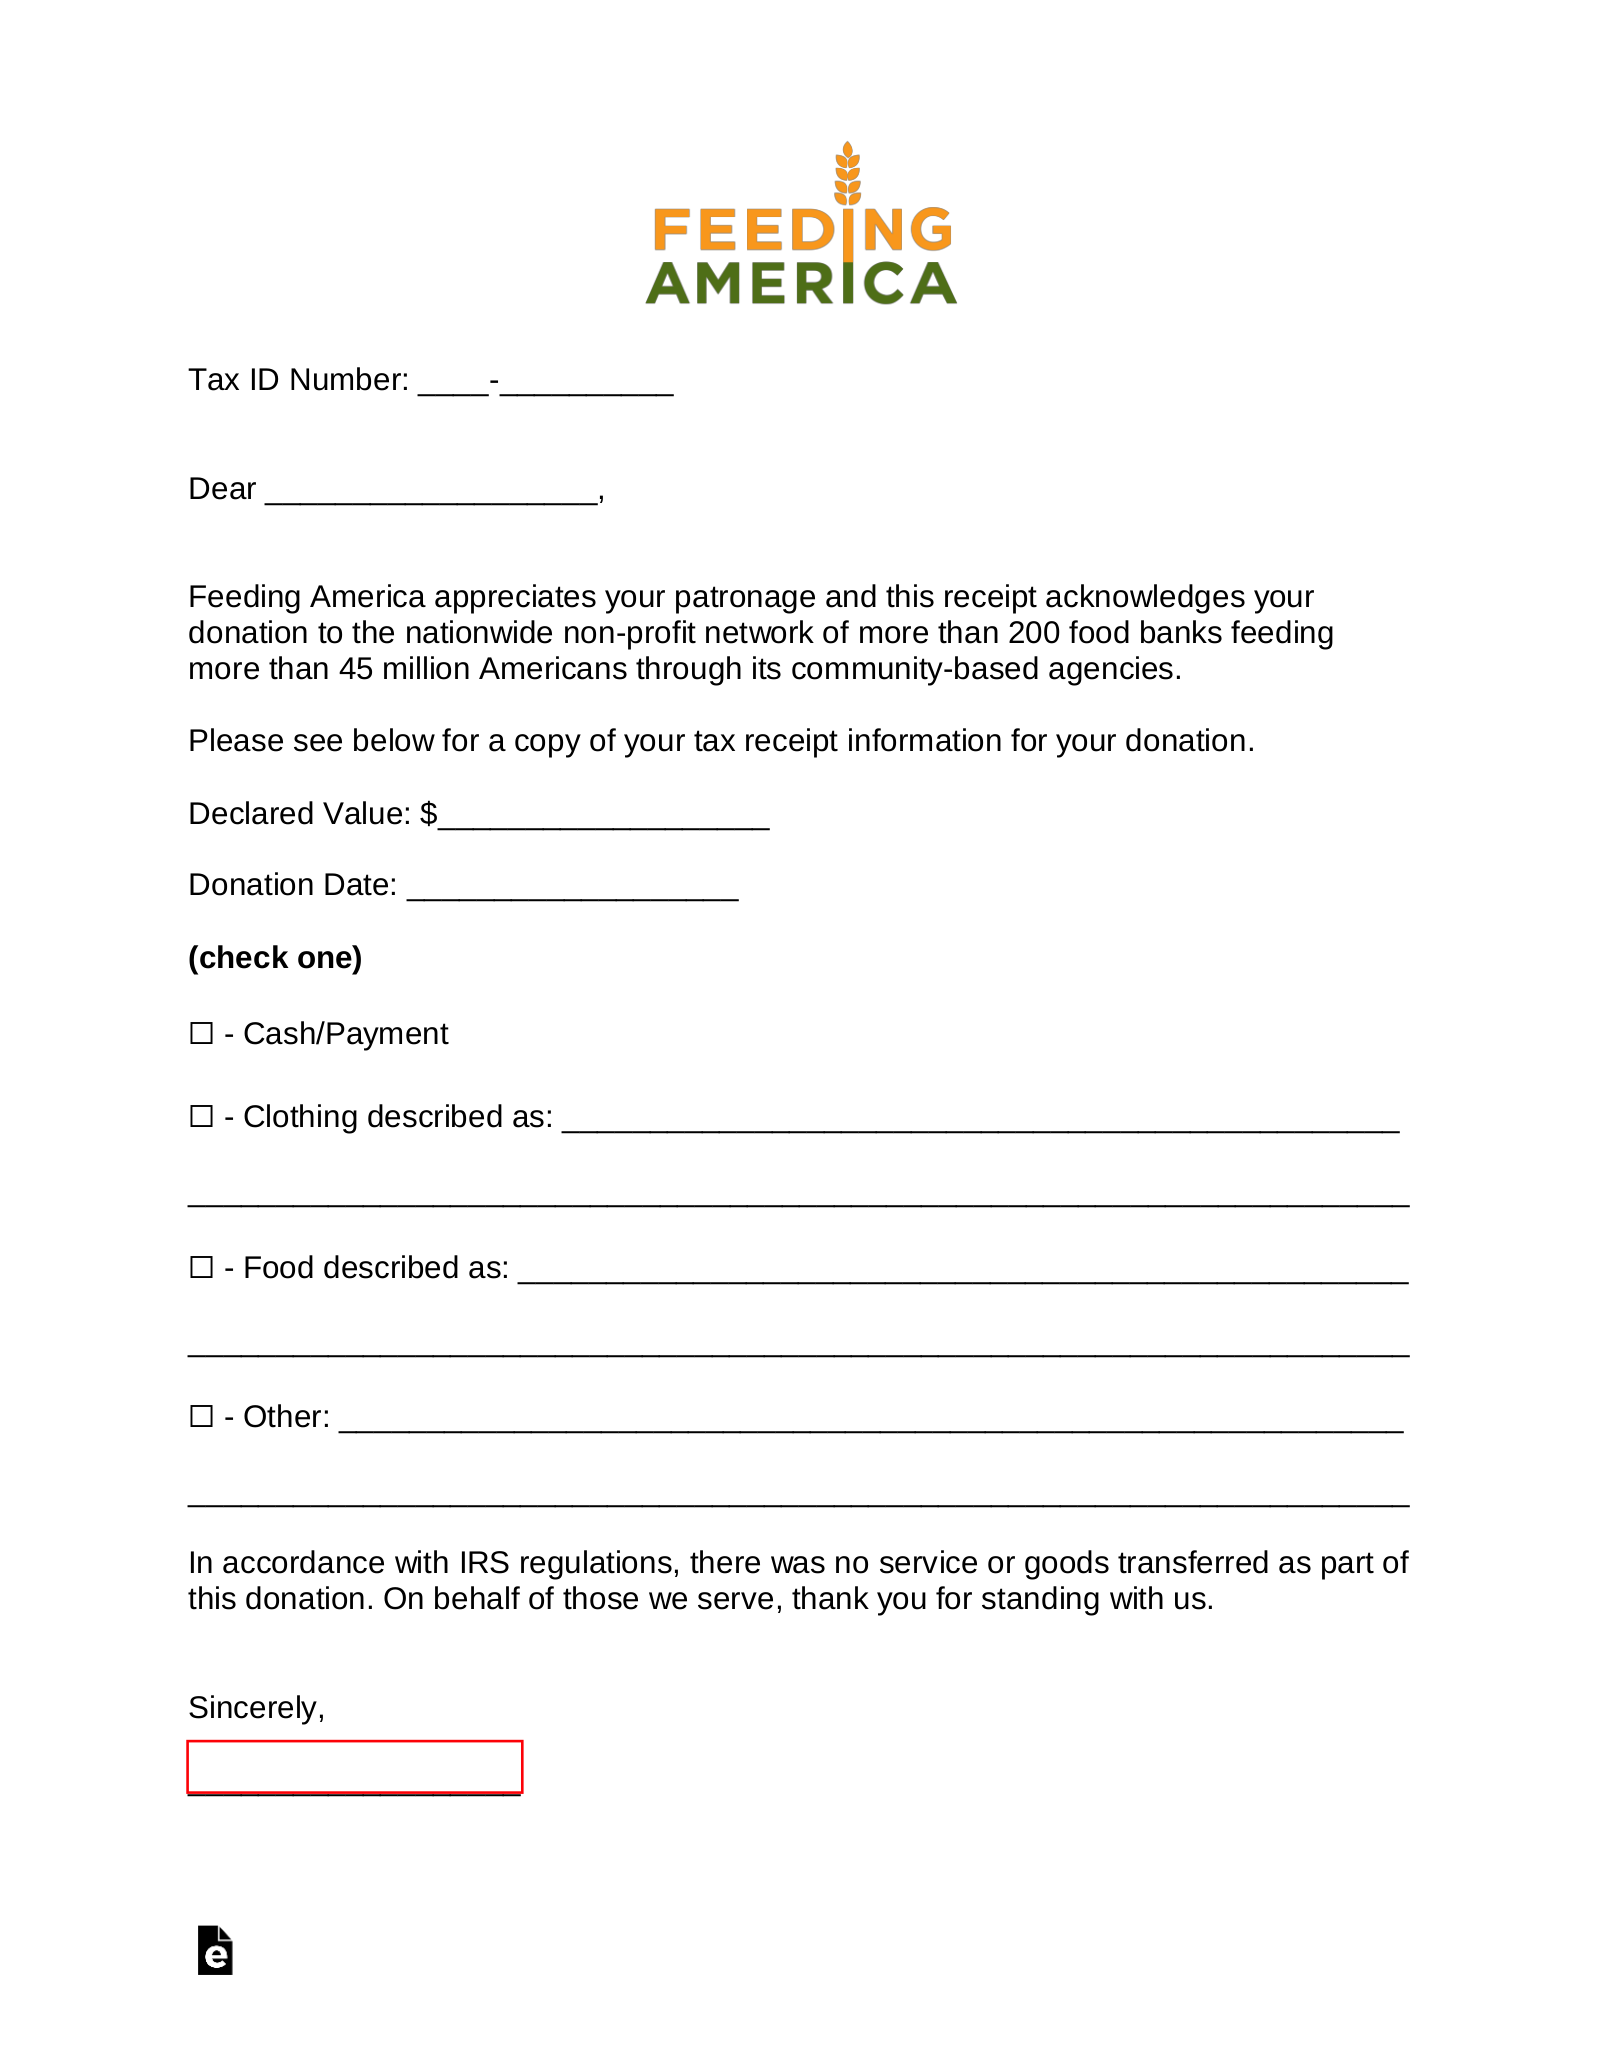 free feeding america donation receipt template word